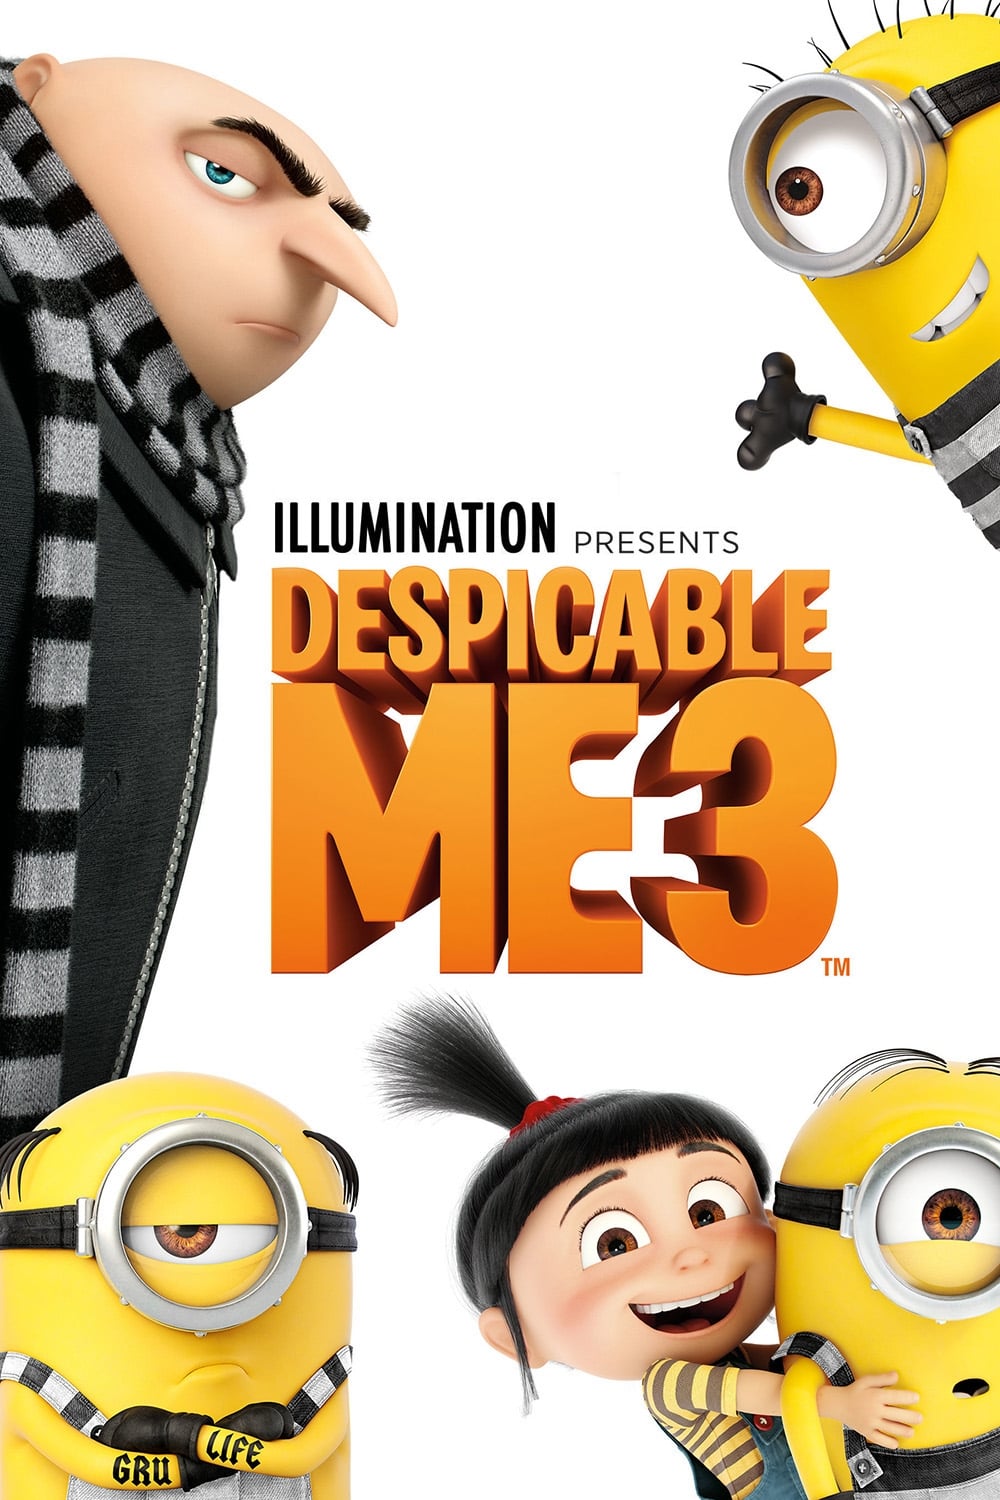 EN - Despicable Me 3 (2017) Minions